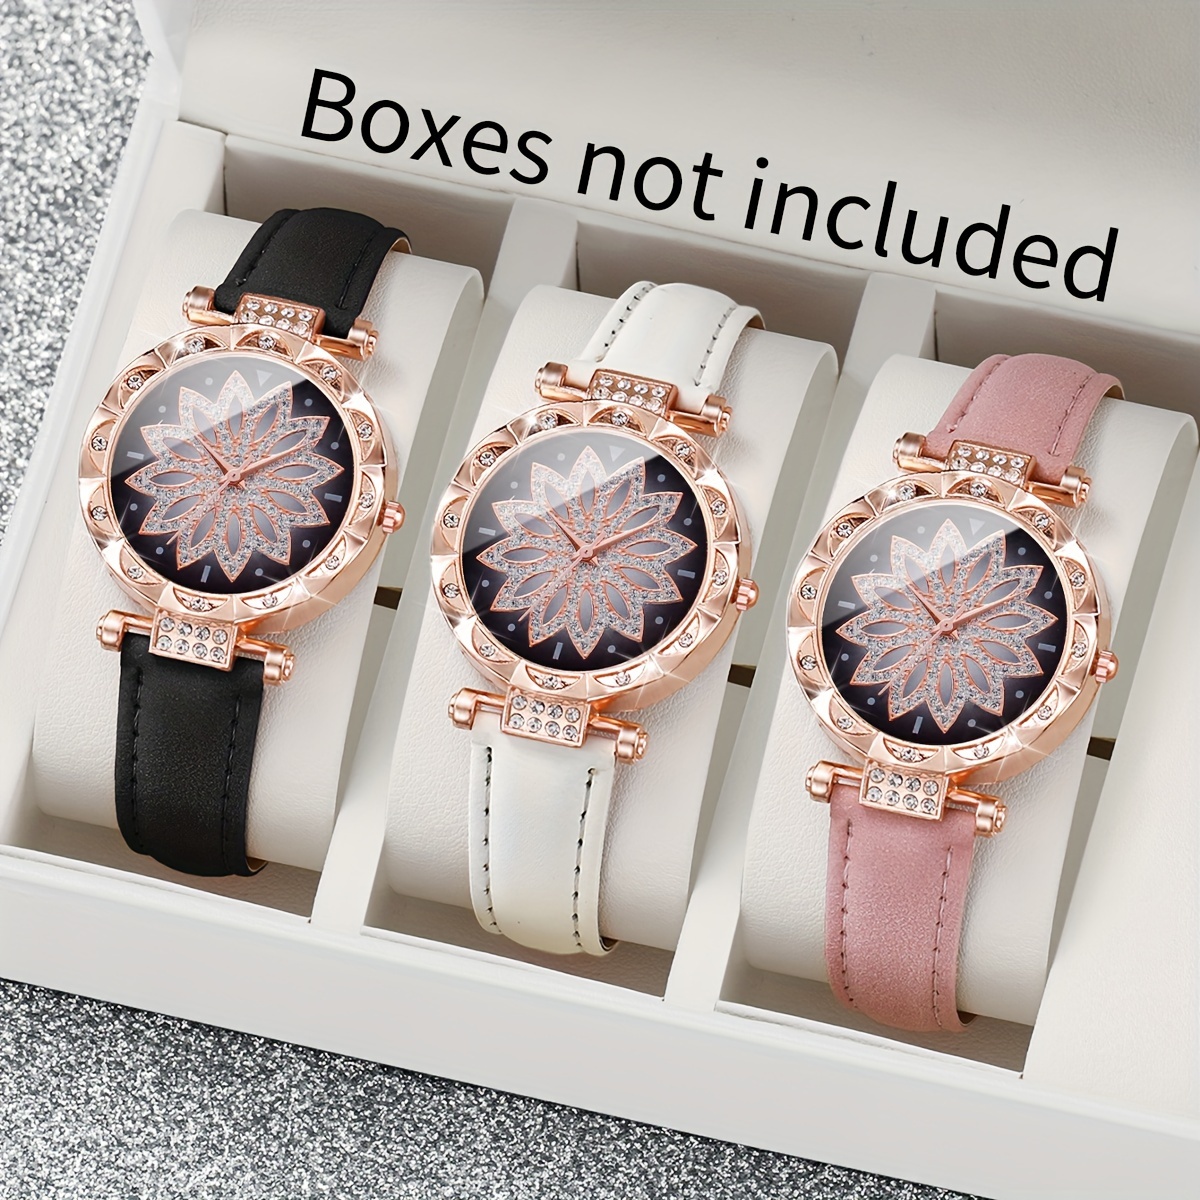 

Elegant 3-piece Women's Quartz Watch Set With Rhinestone Flower Dial & Pu Leather Straps - Black, White, Pink